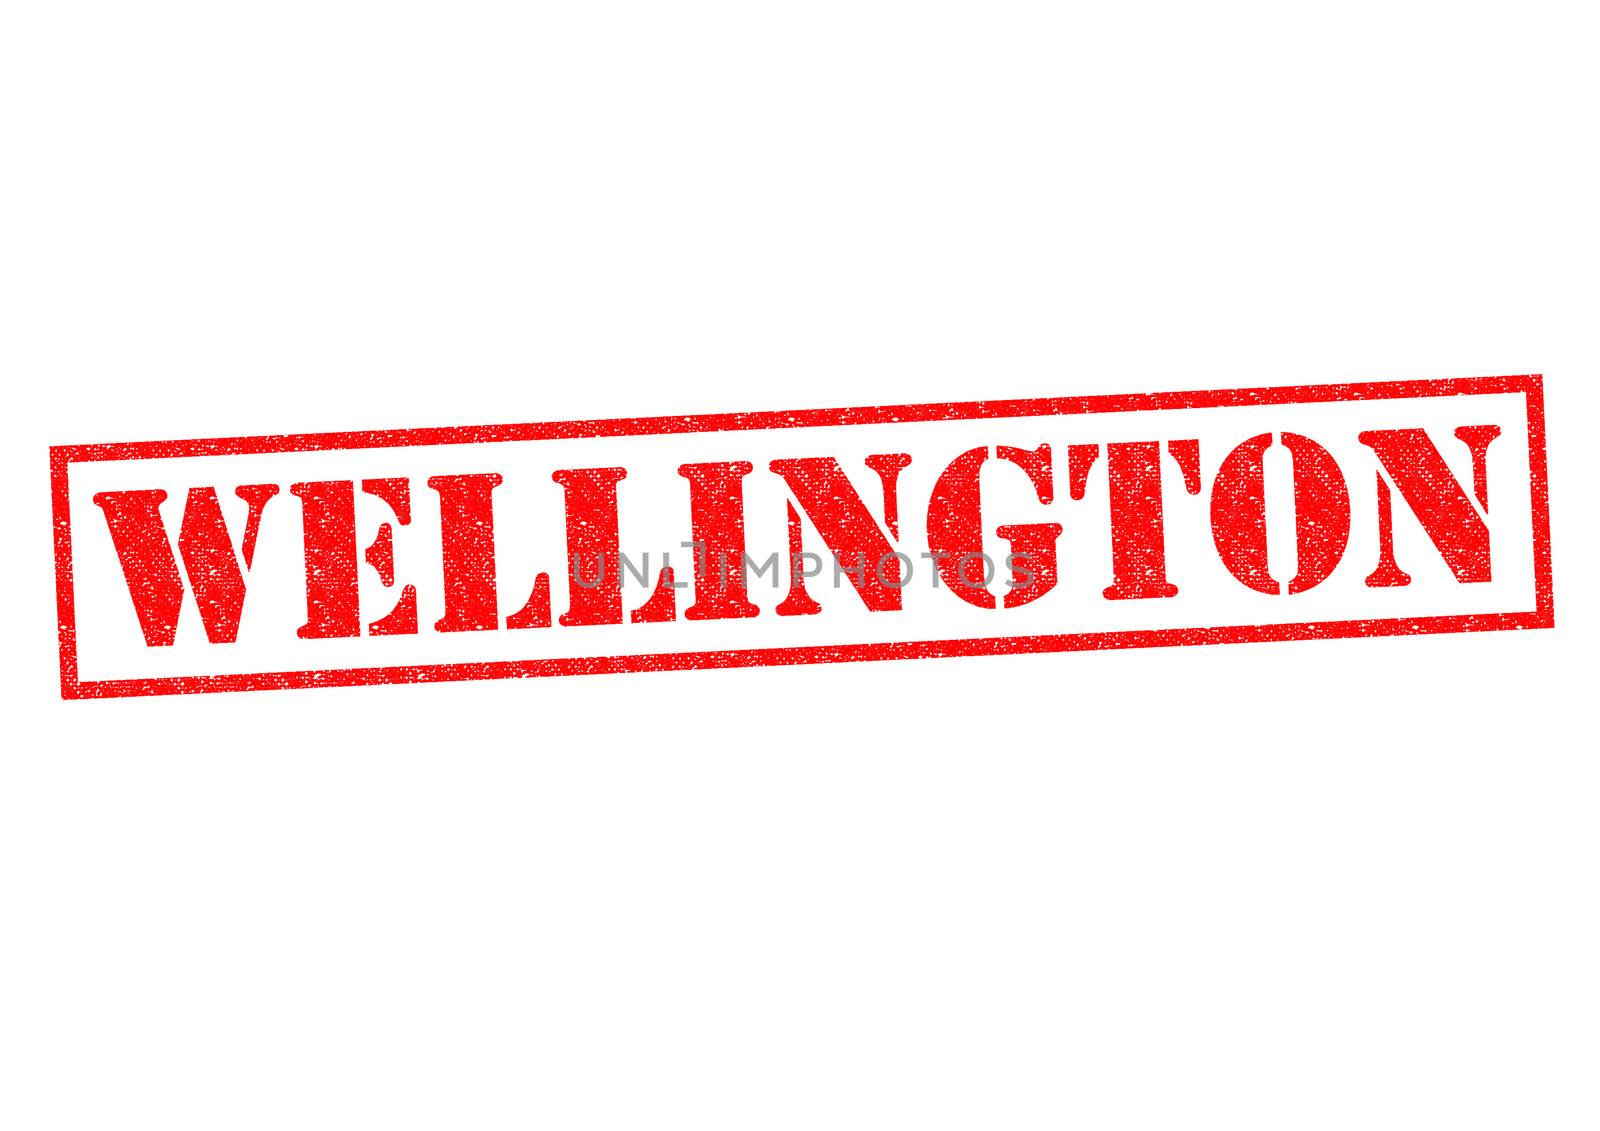 WELLINGTON by chrisdorney